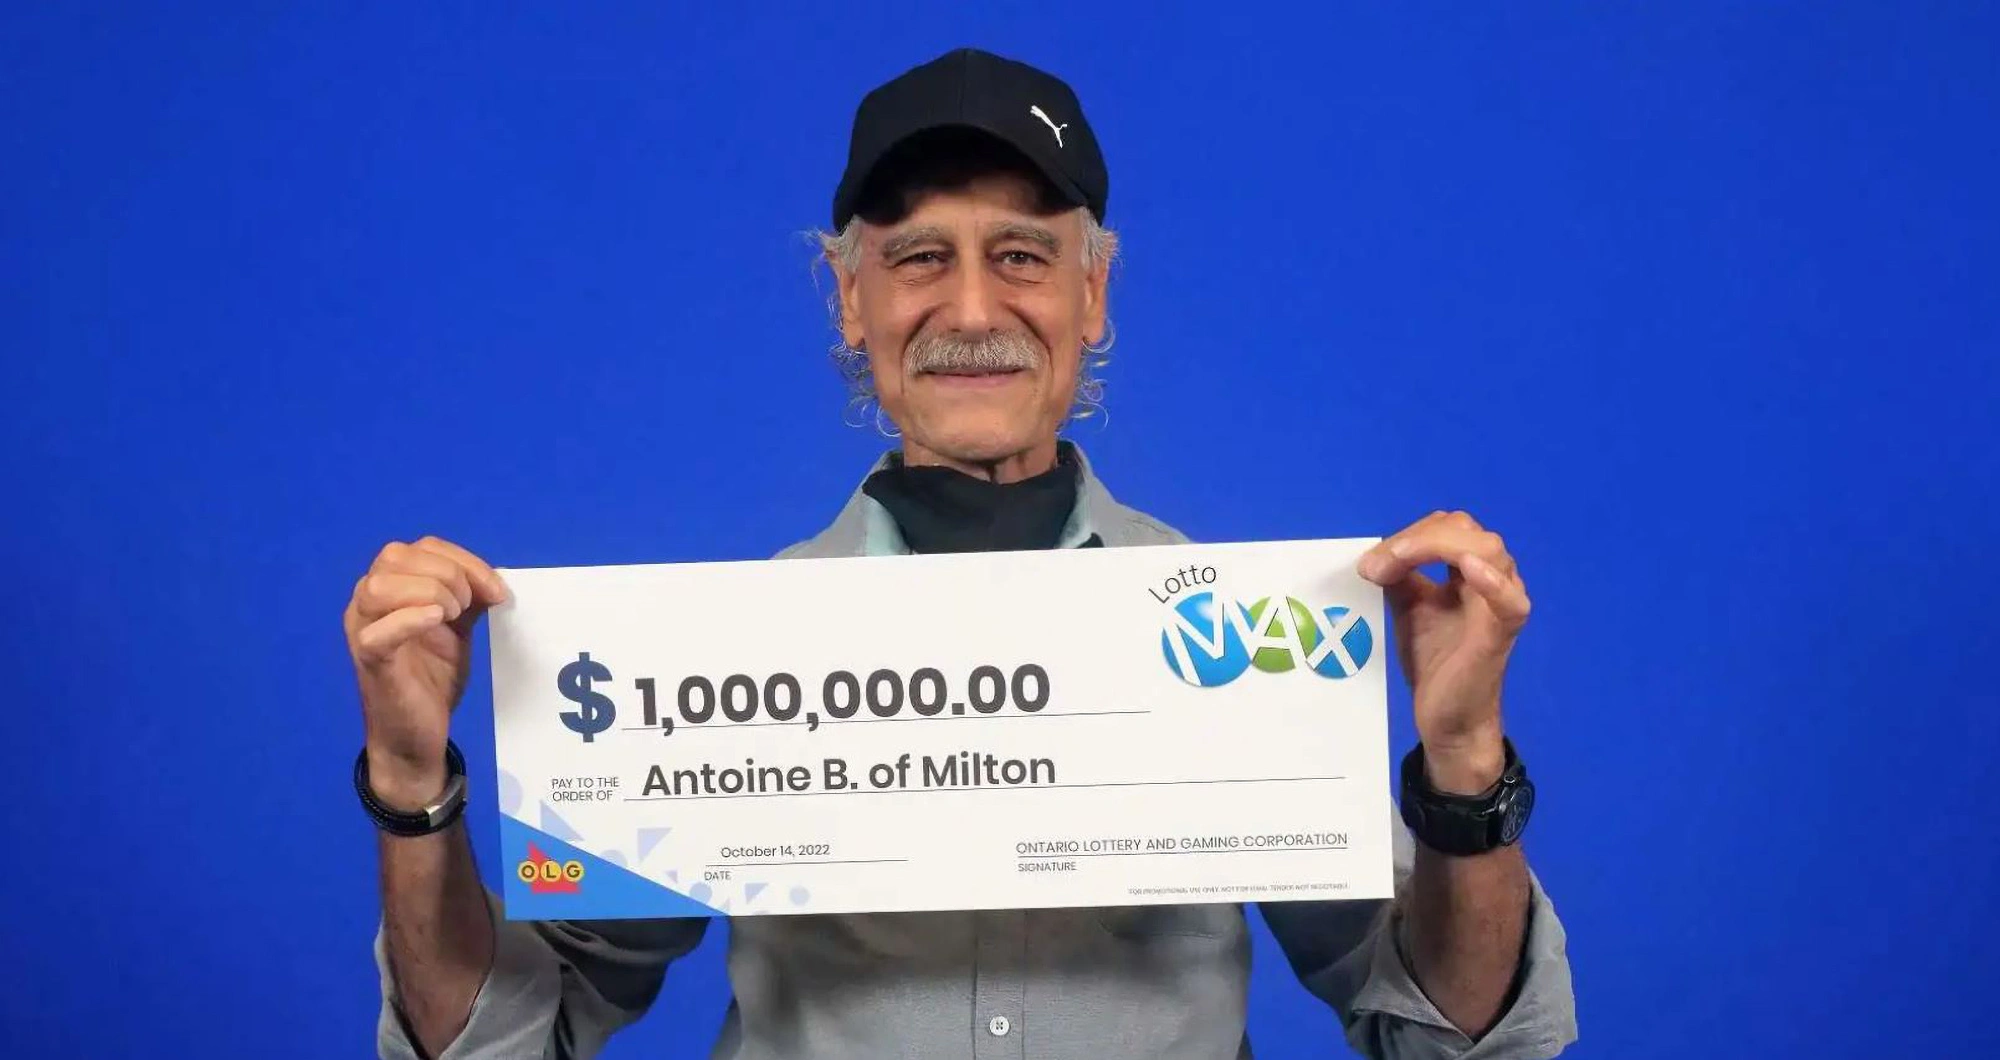 Antoine Beaini poses with winning cheque